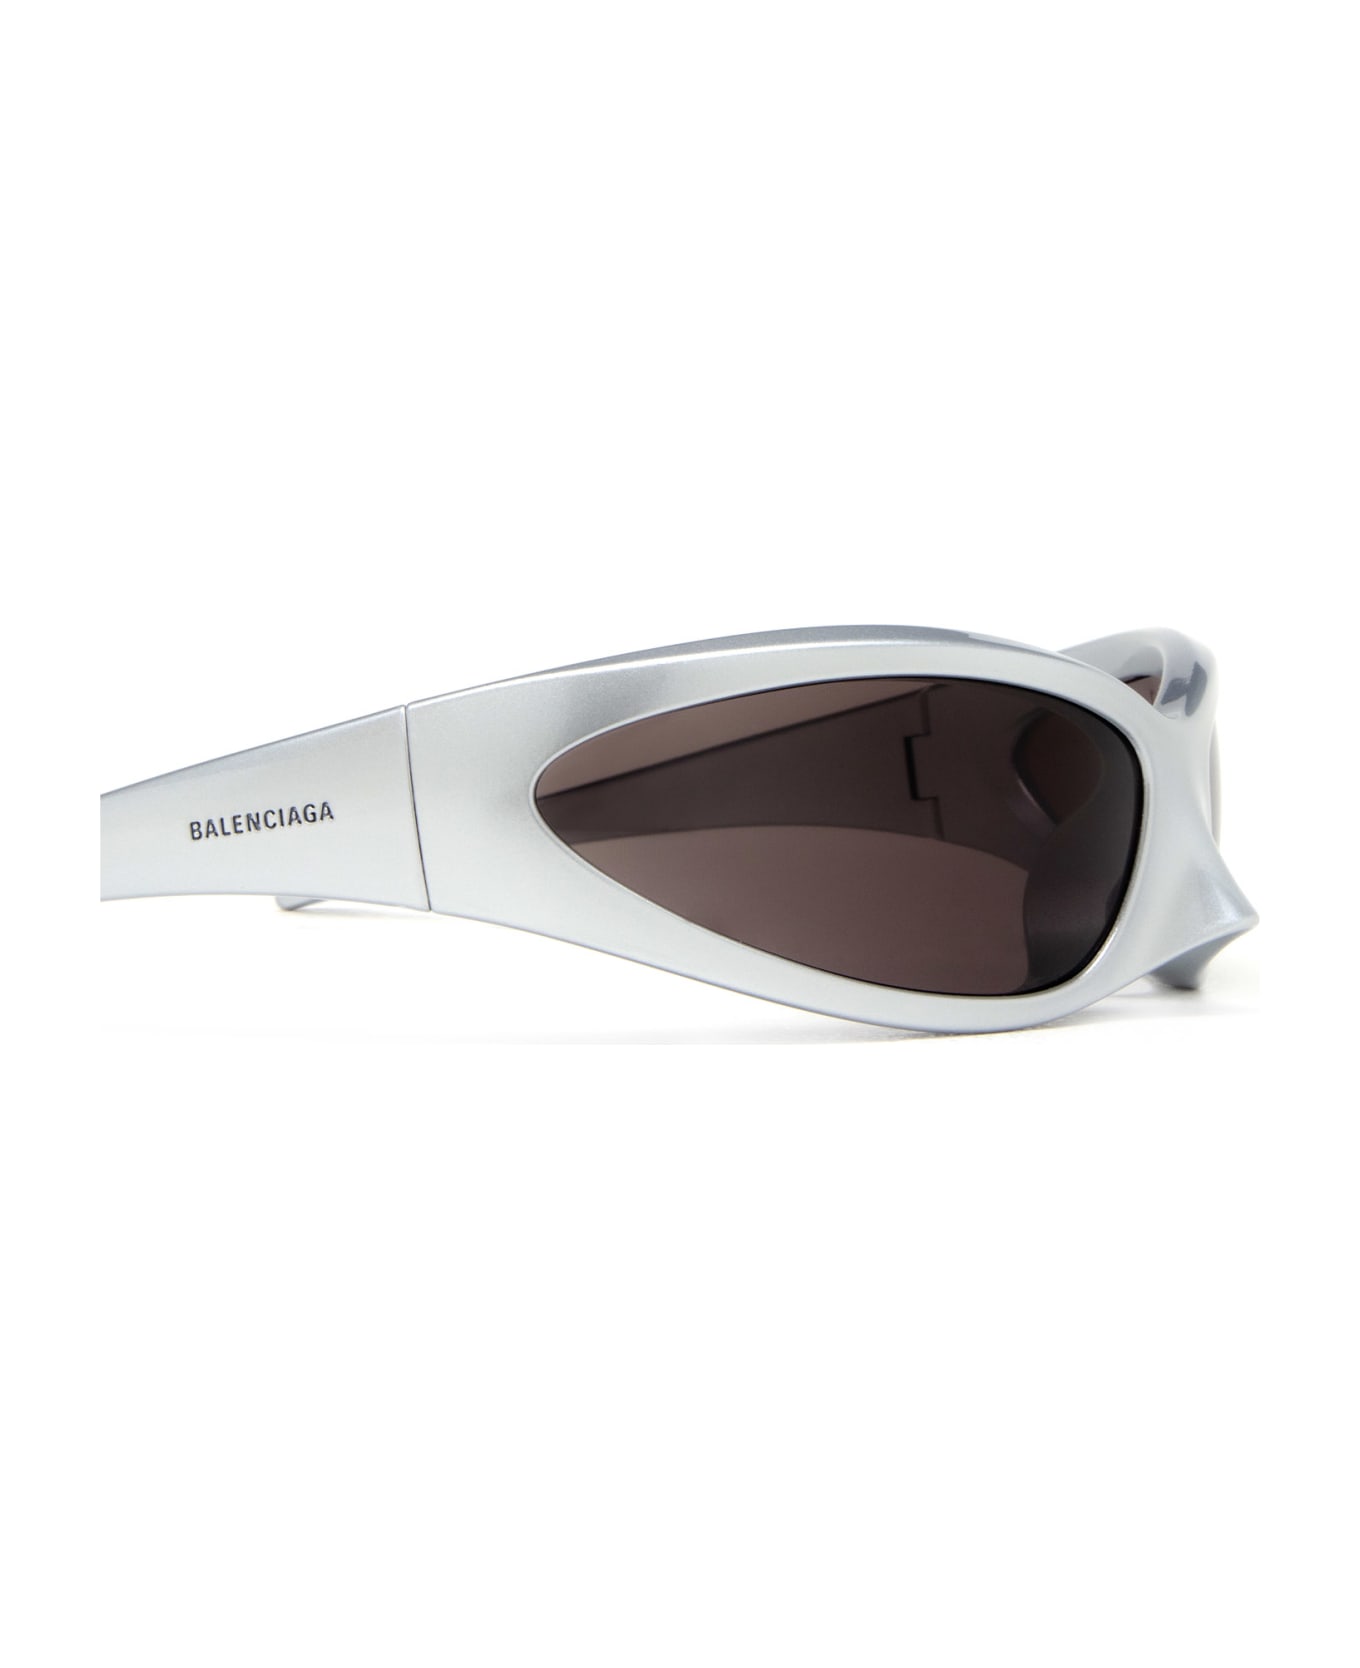 Balenciaga Eyewear Bb0251s Sunglasses - 005 SILVER SILVER GREY